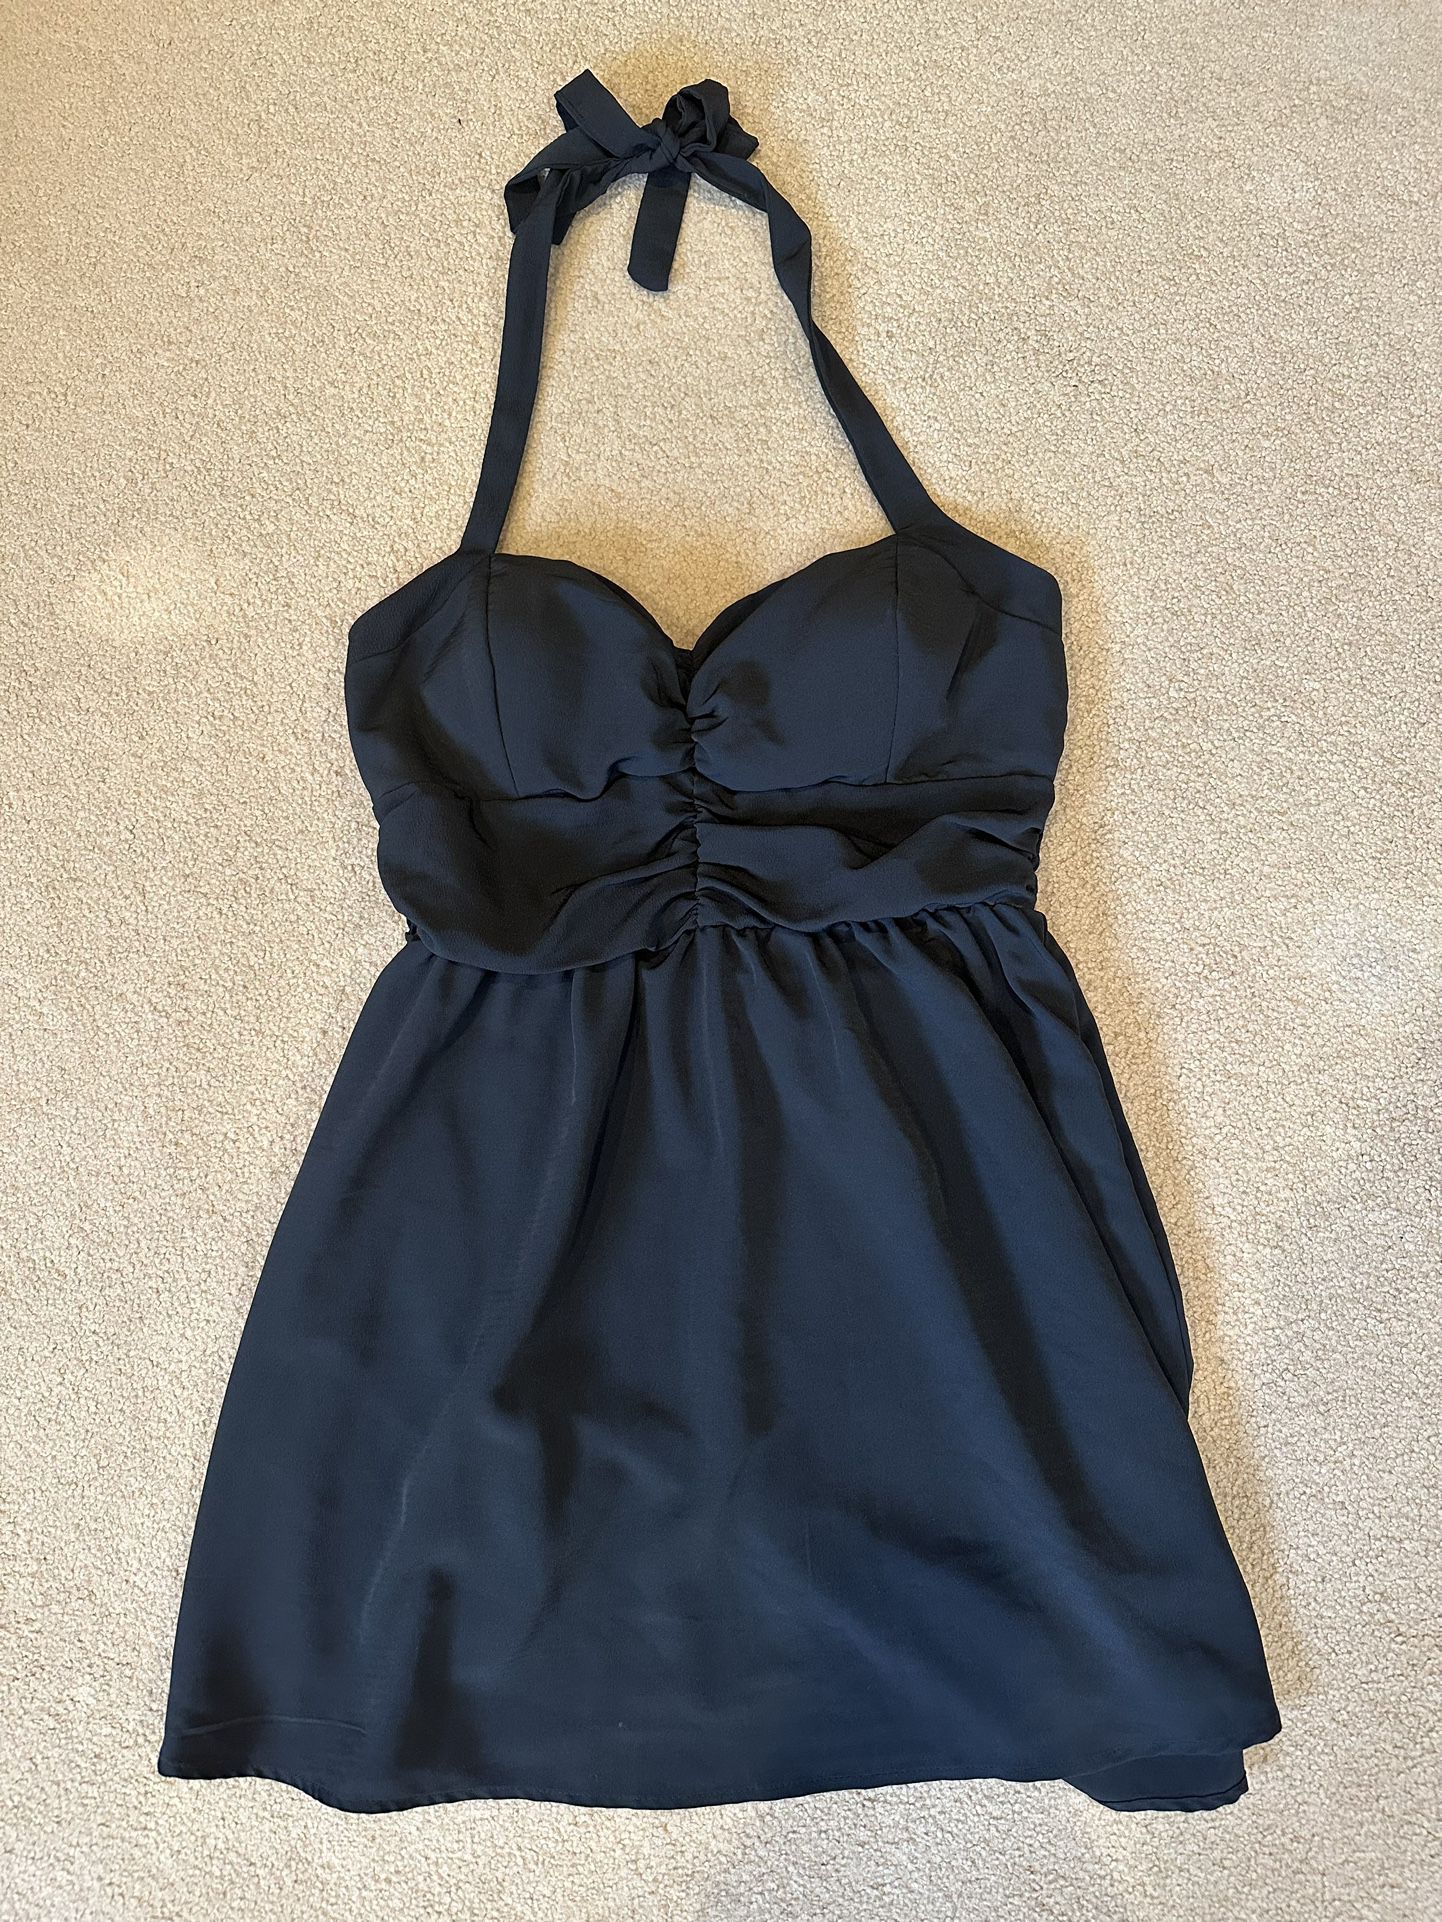 Lily Rose Women’s Black Halter Top Dress - XL 